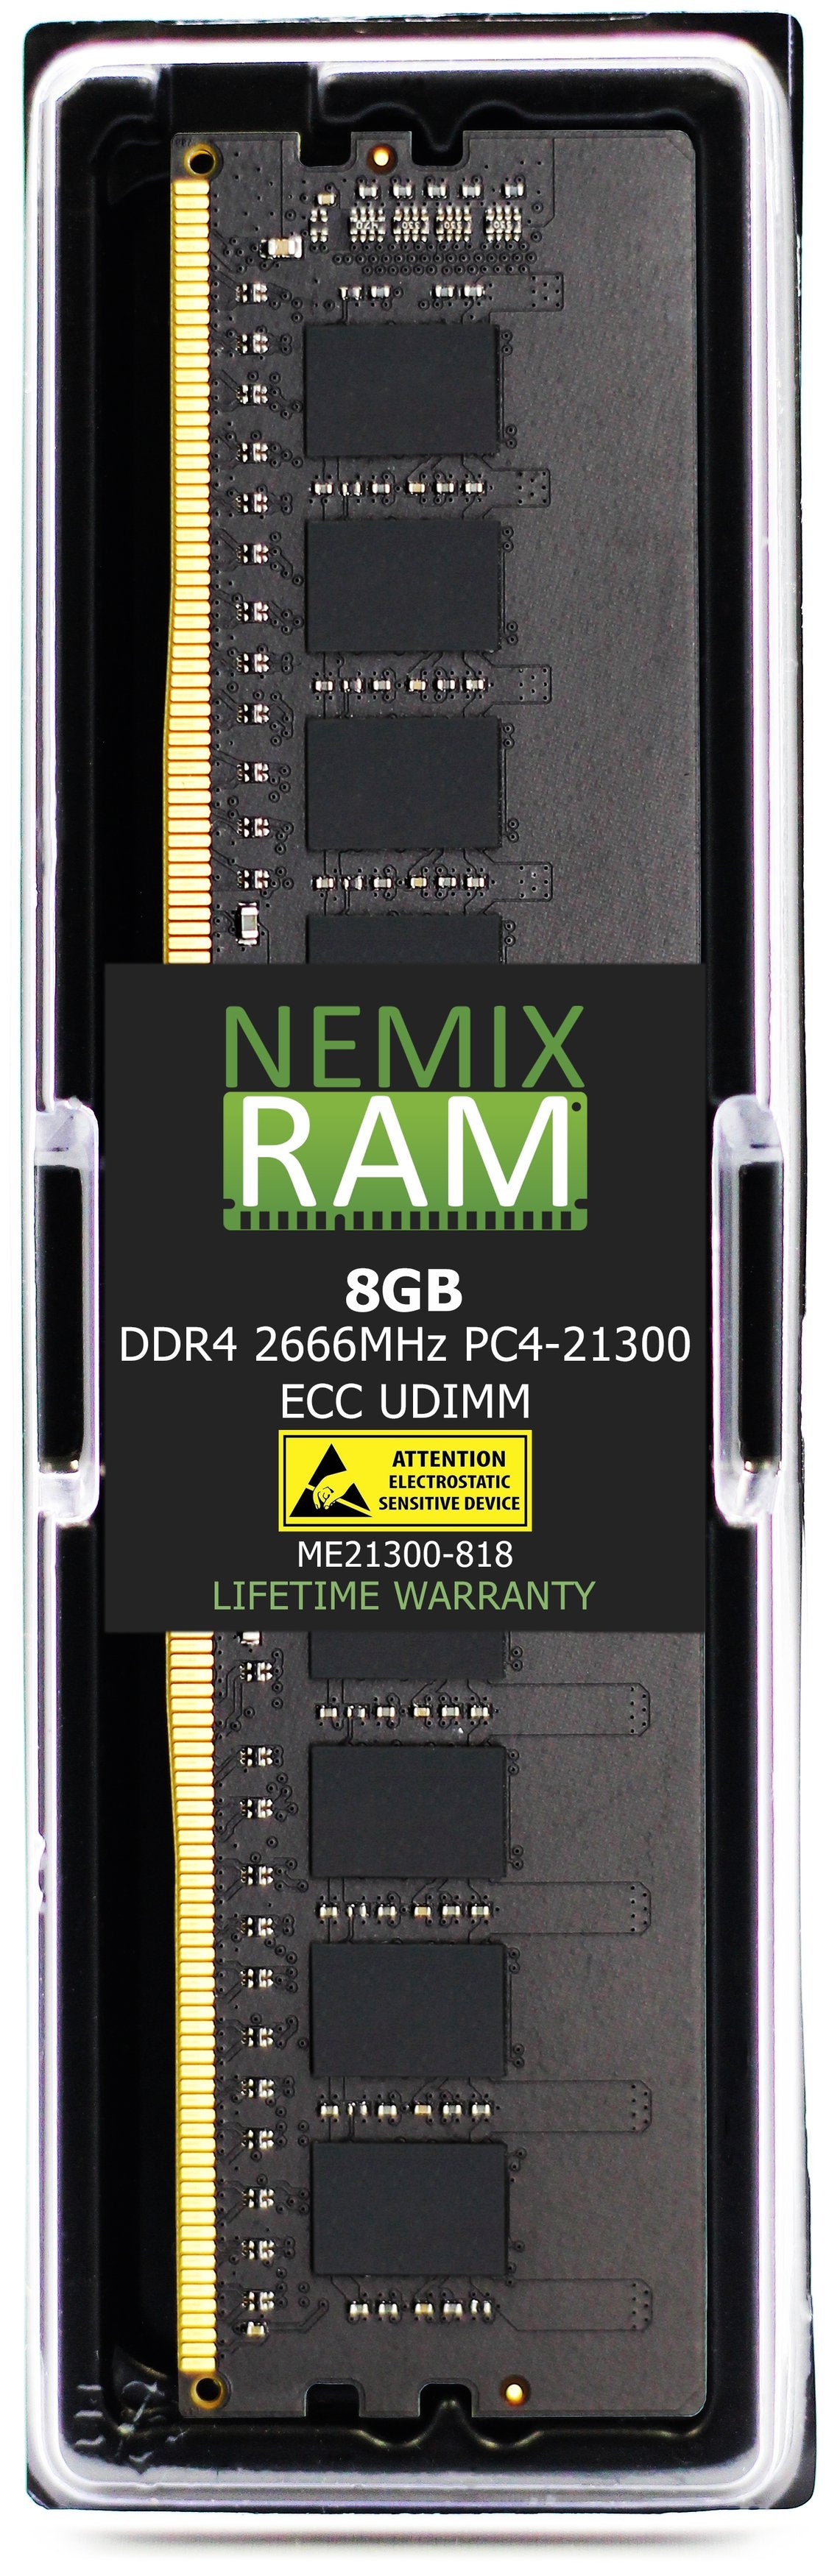 NEMIX RAM Memory Upgrade equivalent to ASUSTOR AS-8GECD4-U 92M11-S80EUD40 ECC UDIMM Memory Module